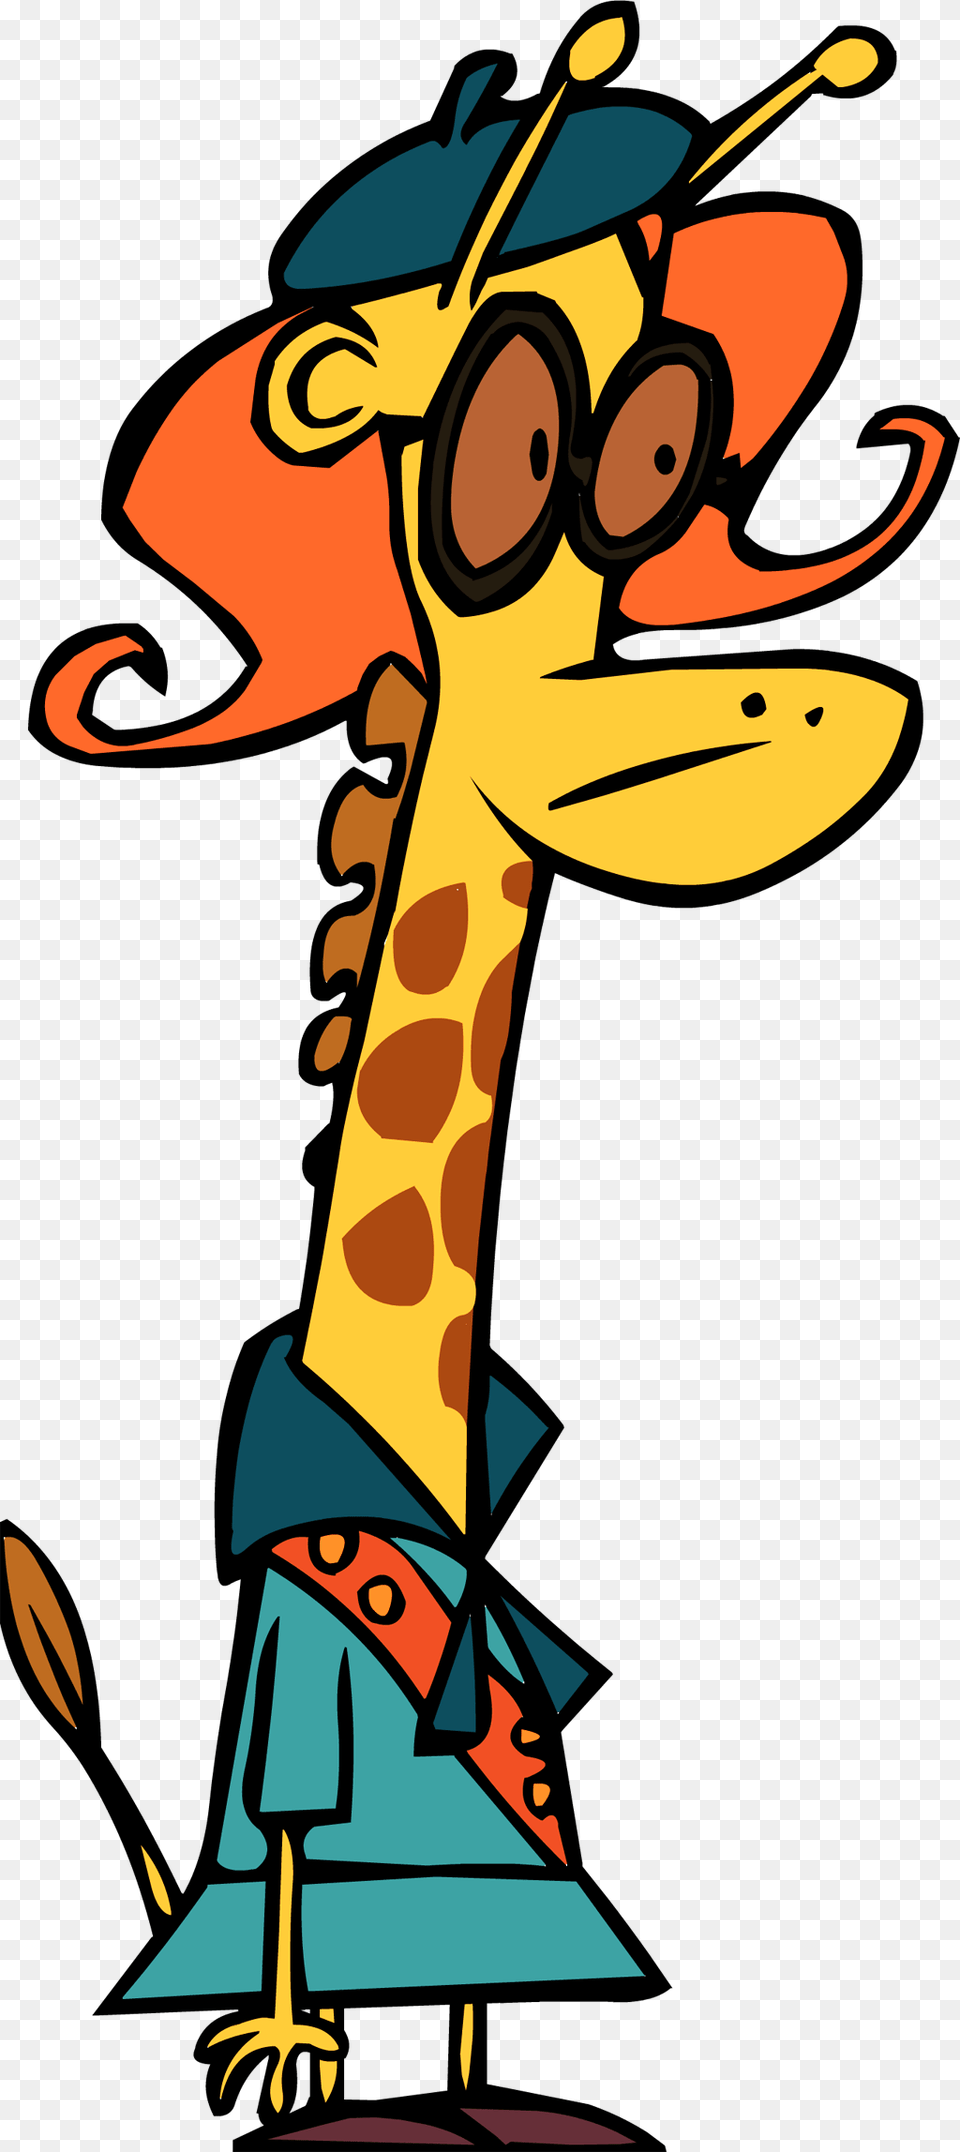 Camp Lazlo Character Nina Neckerly The Giraffe, Cartoon, Art Png Image